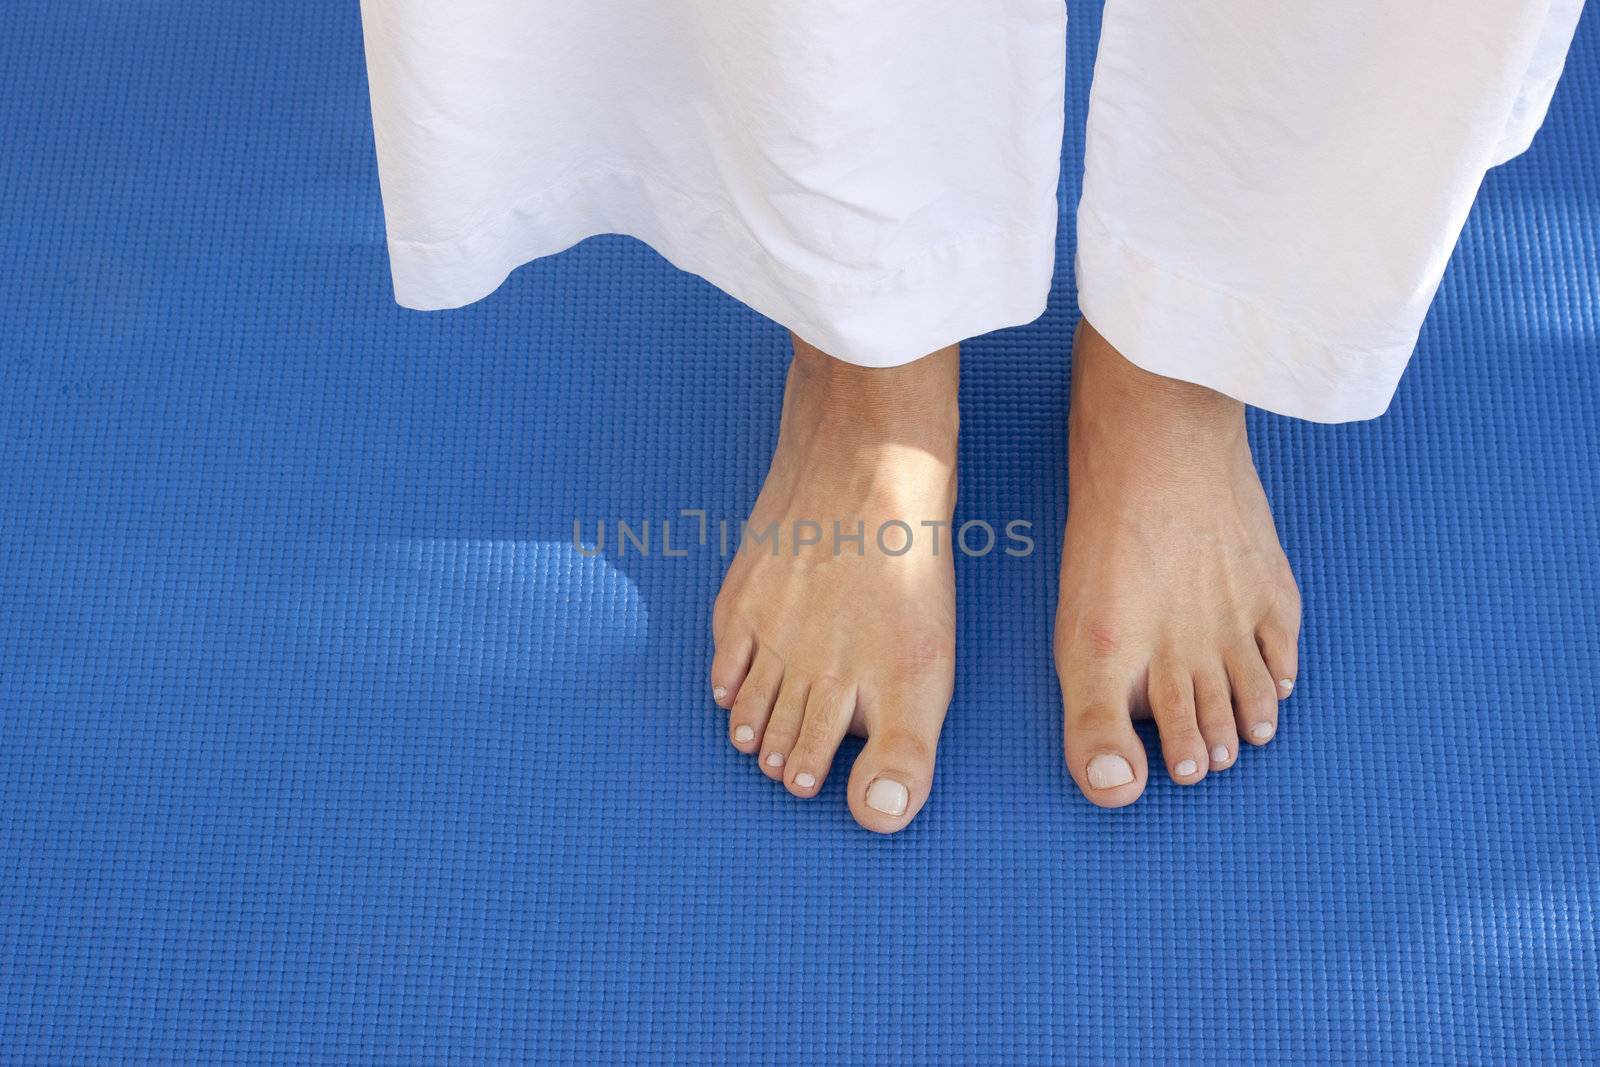 Feet on a blue mat by annems